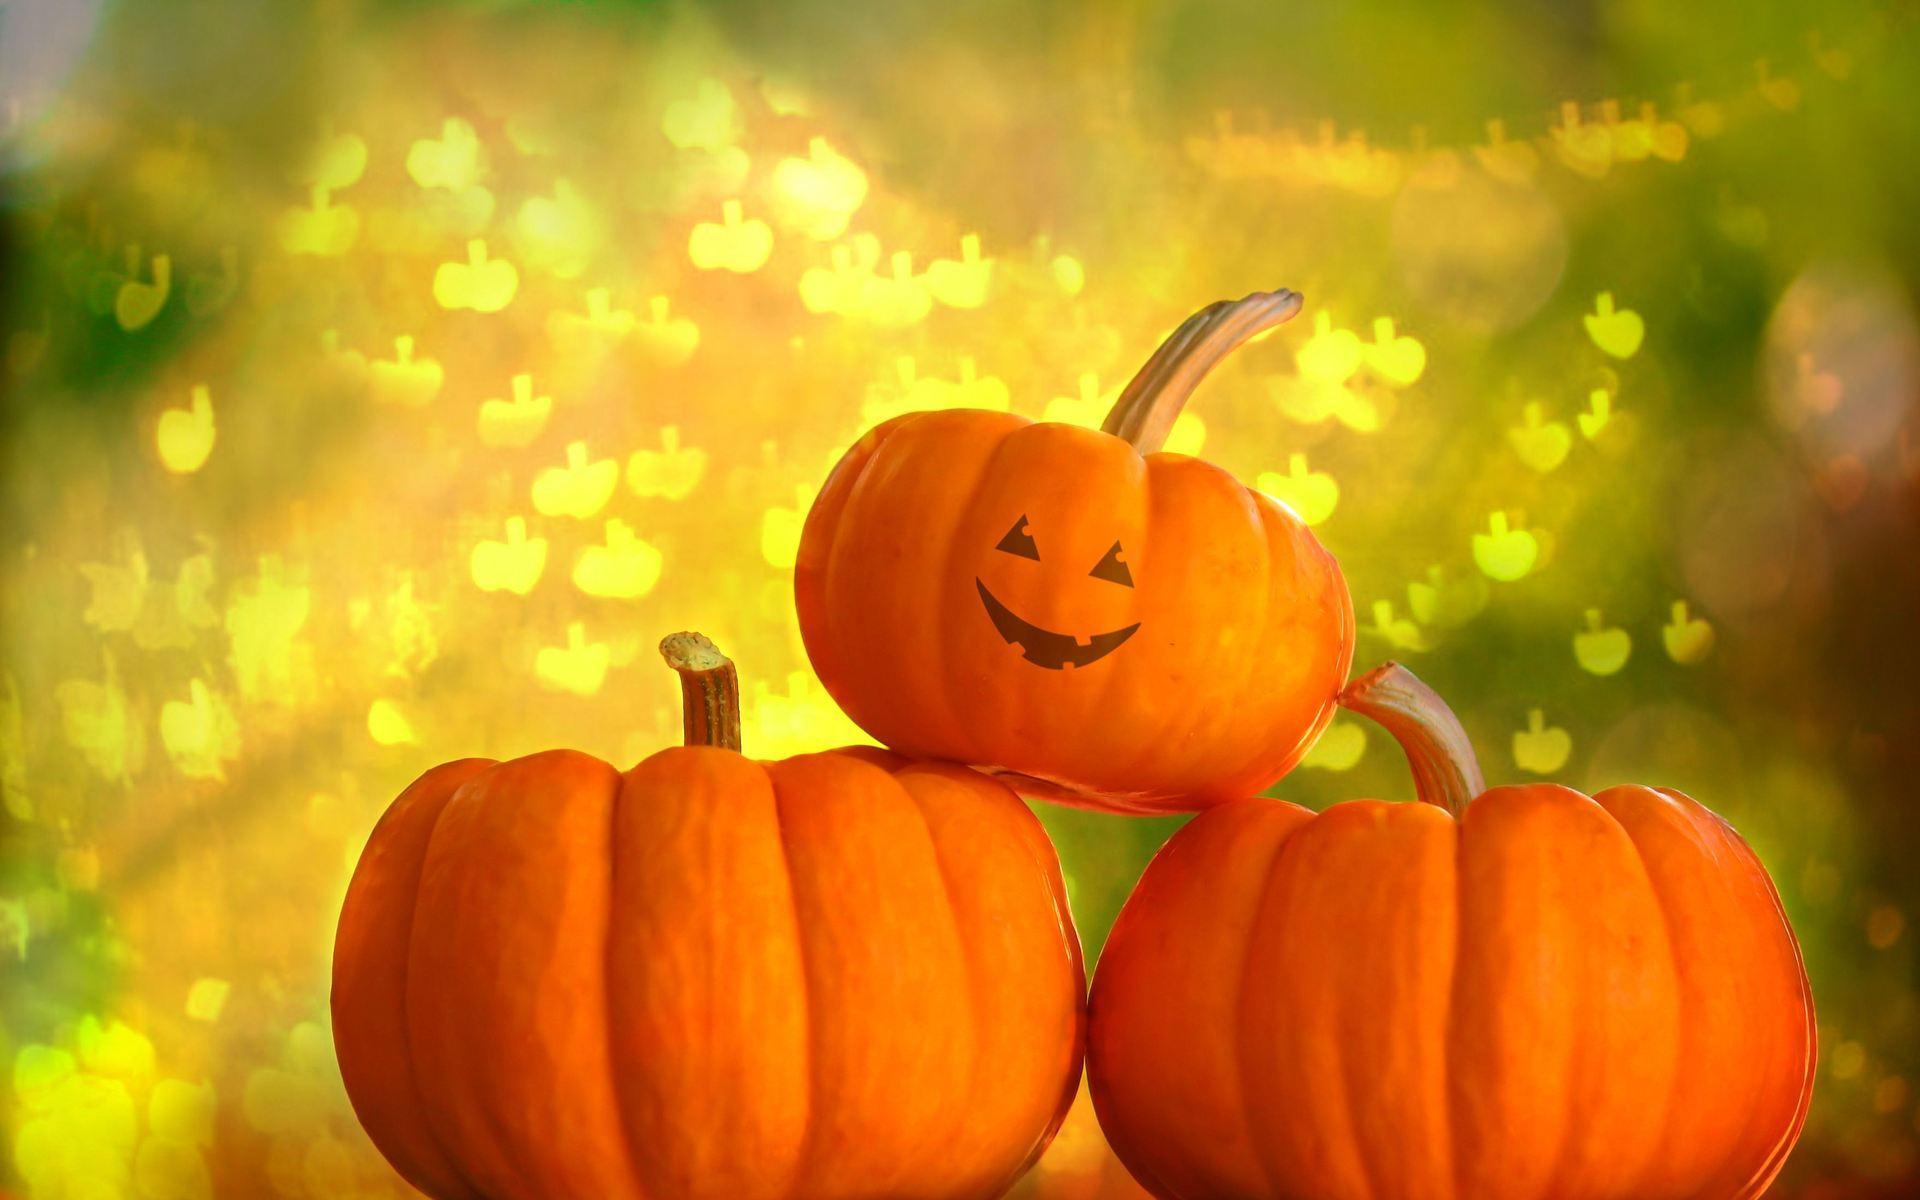 Pumpkin Background Images  Free Download on Freepik